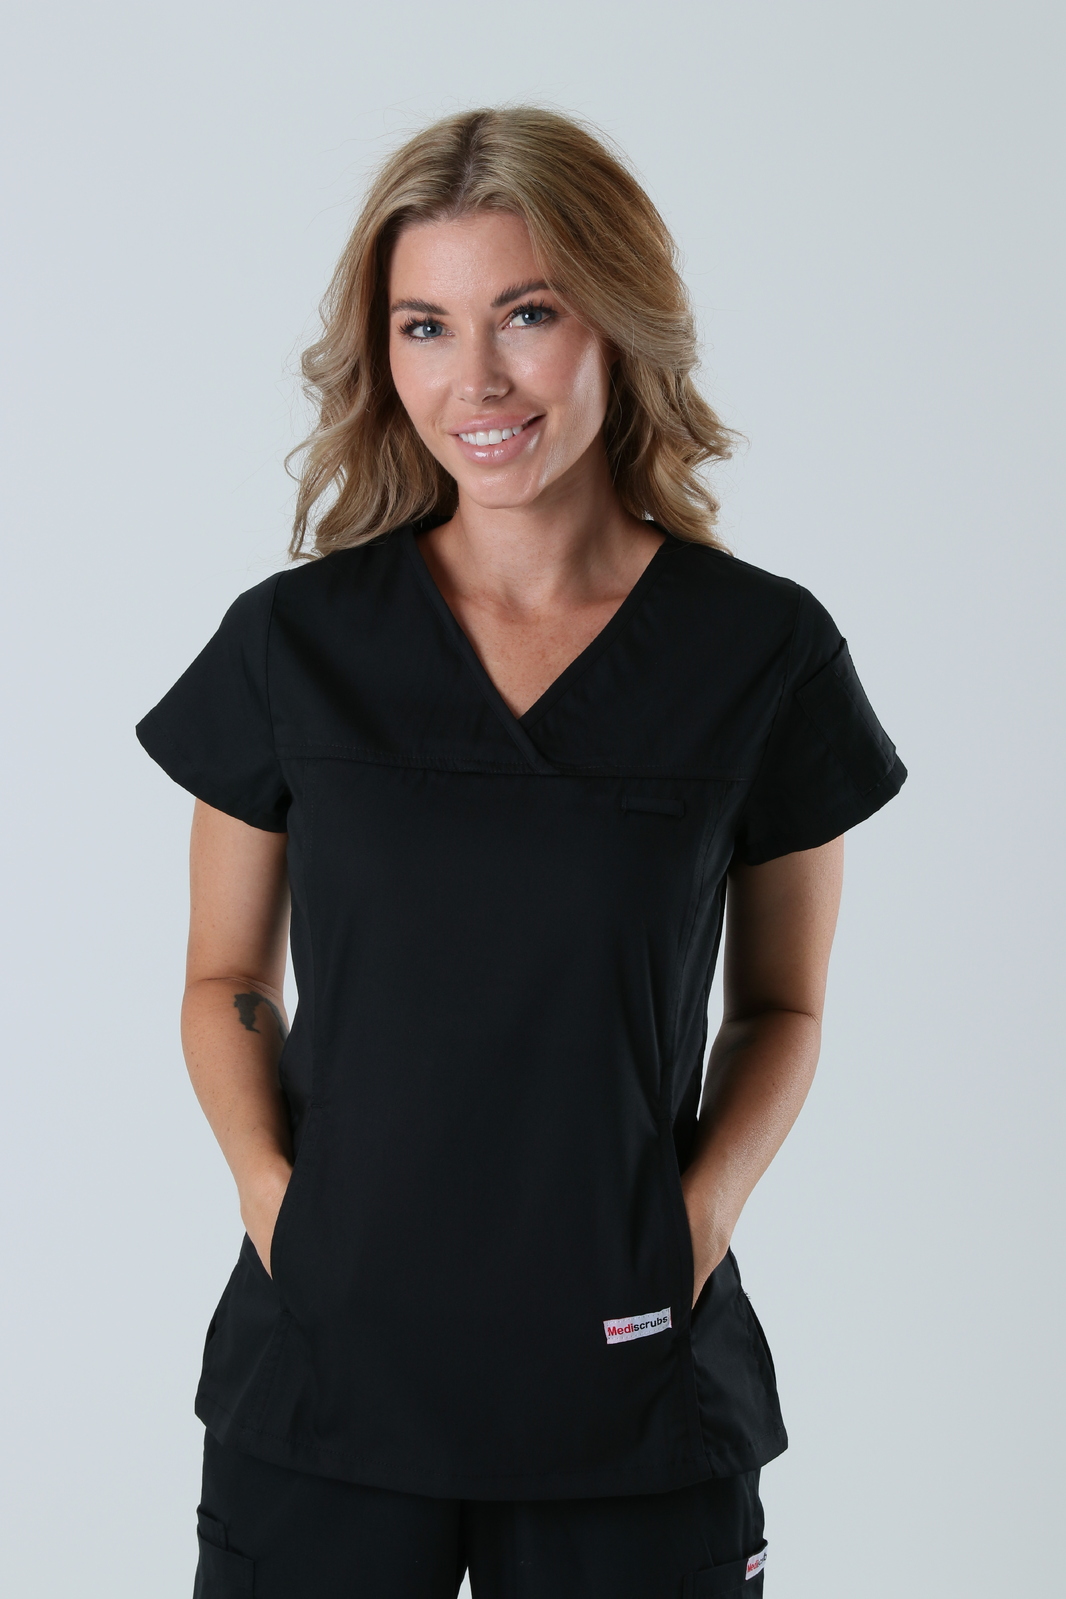 Queensland Children's Hospital Emergency Department Assistant Nurse Unit Manager Uniform Top Bundle  (Women's Fit Top in Black incl Logos)